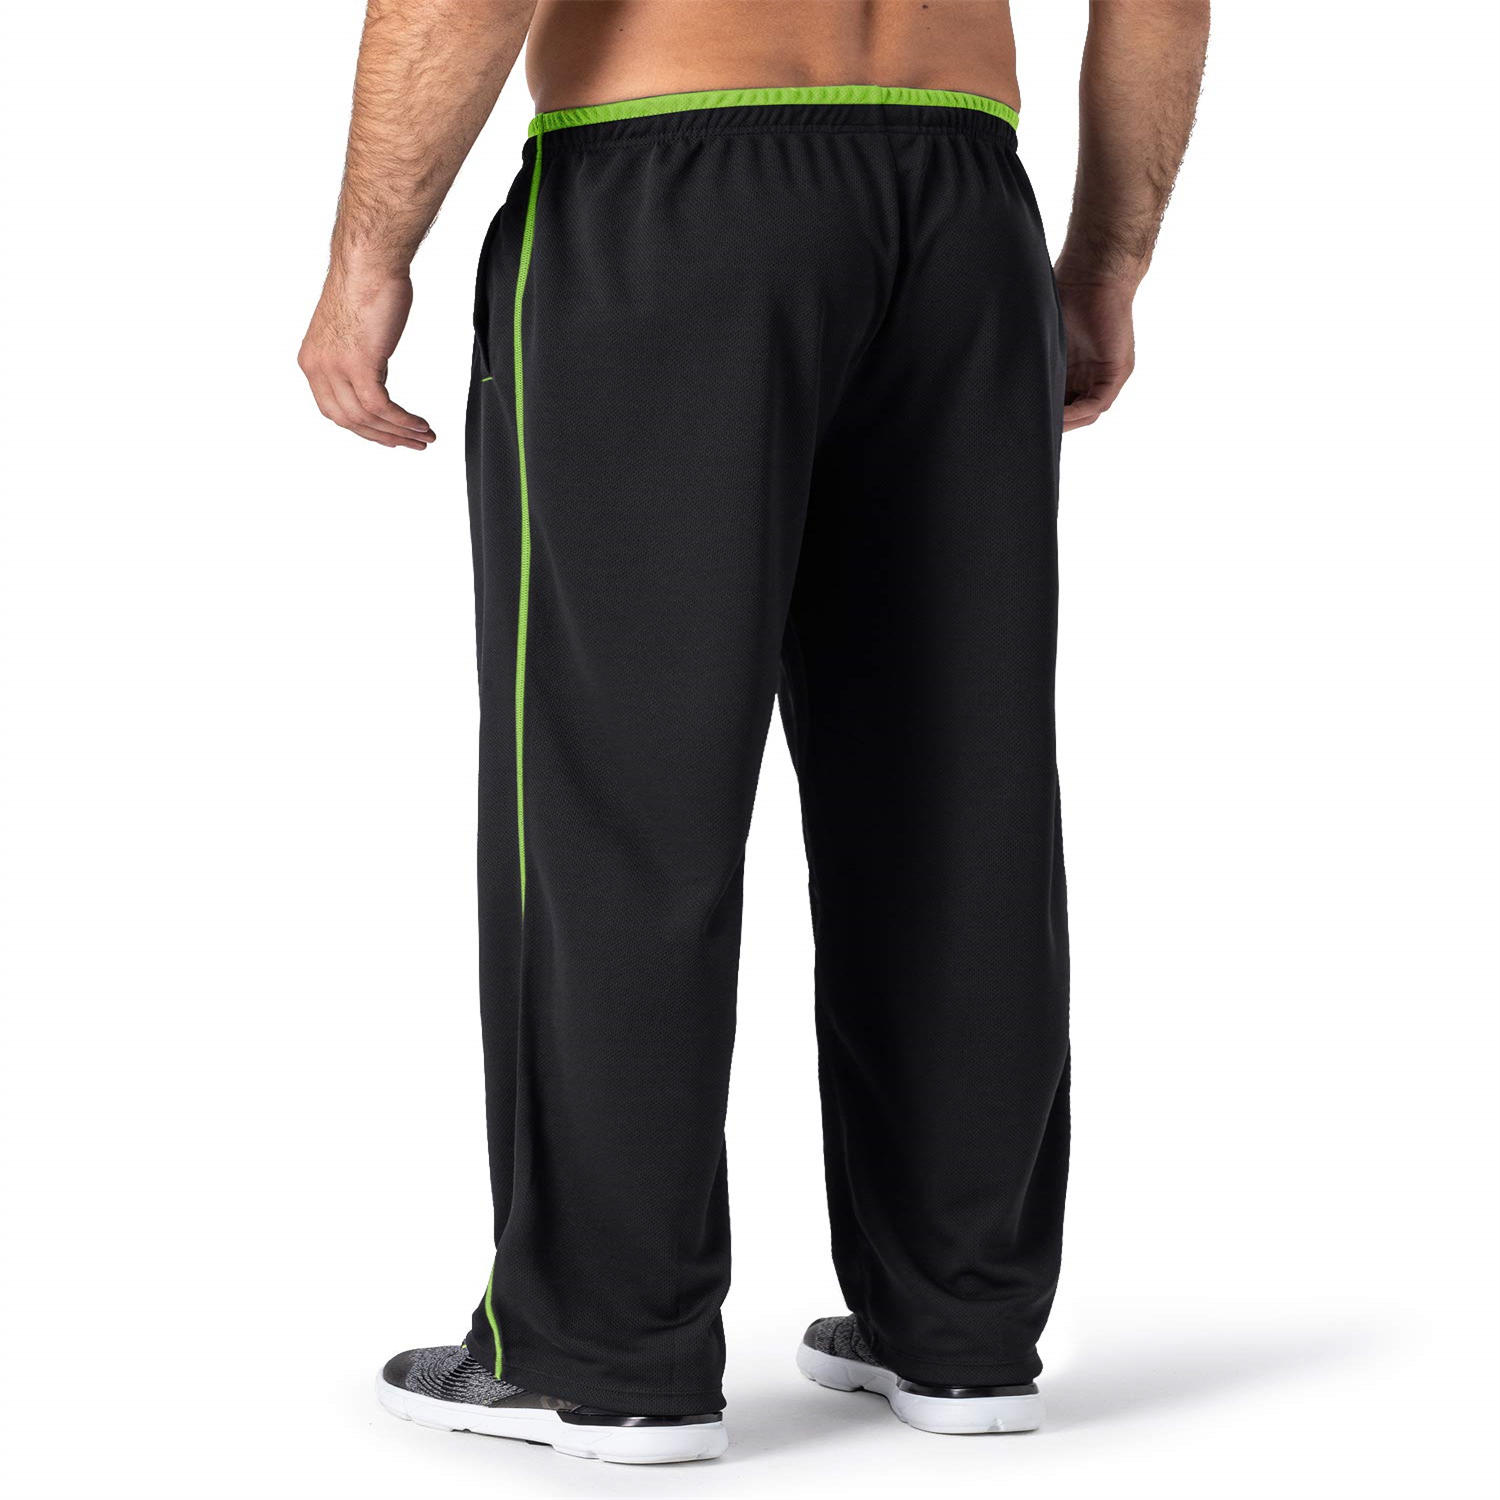 Men Lightweight Sweatpants Loose Fit Open Bottom Mesh Athletic Pants with Zipper Pockets